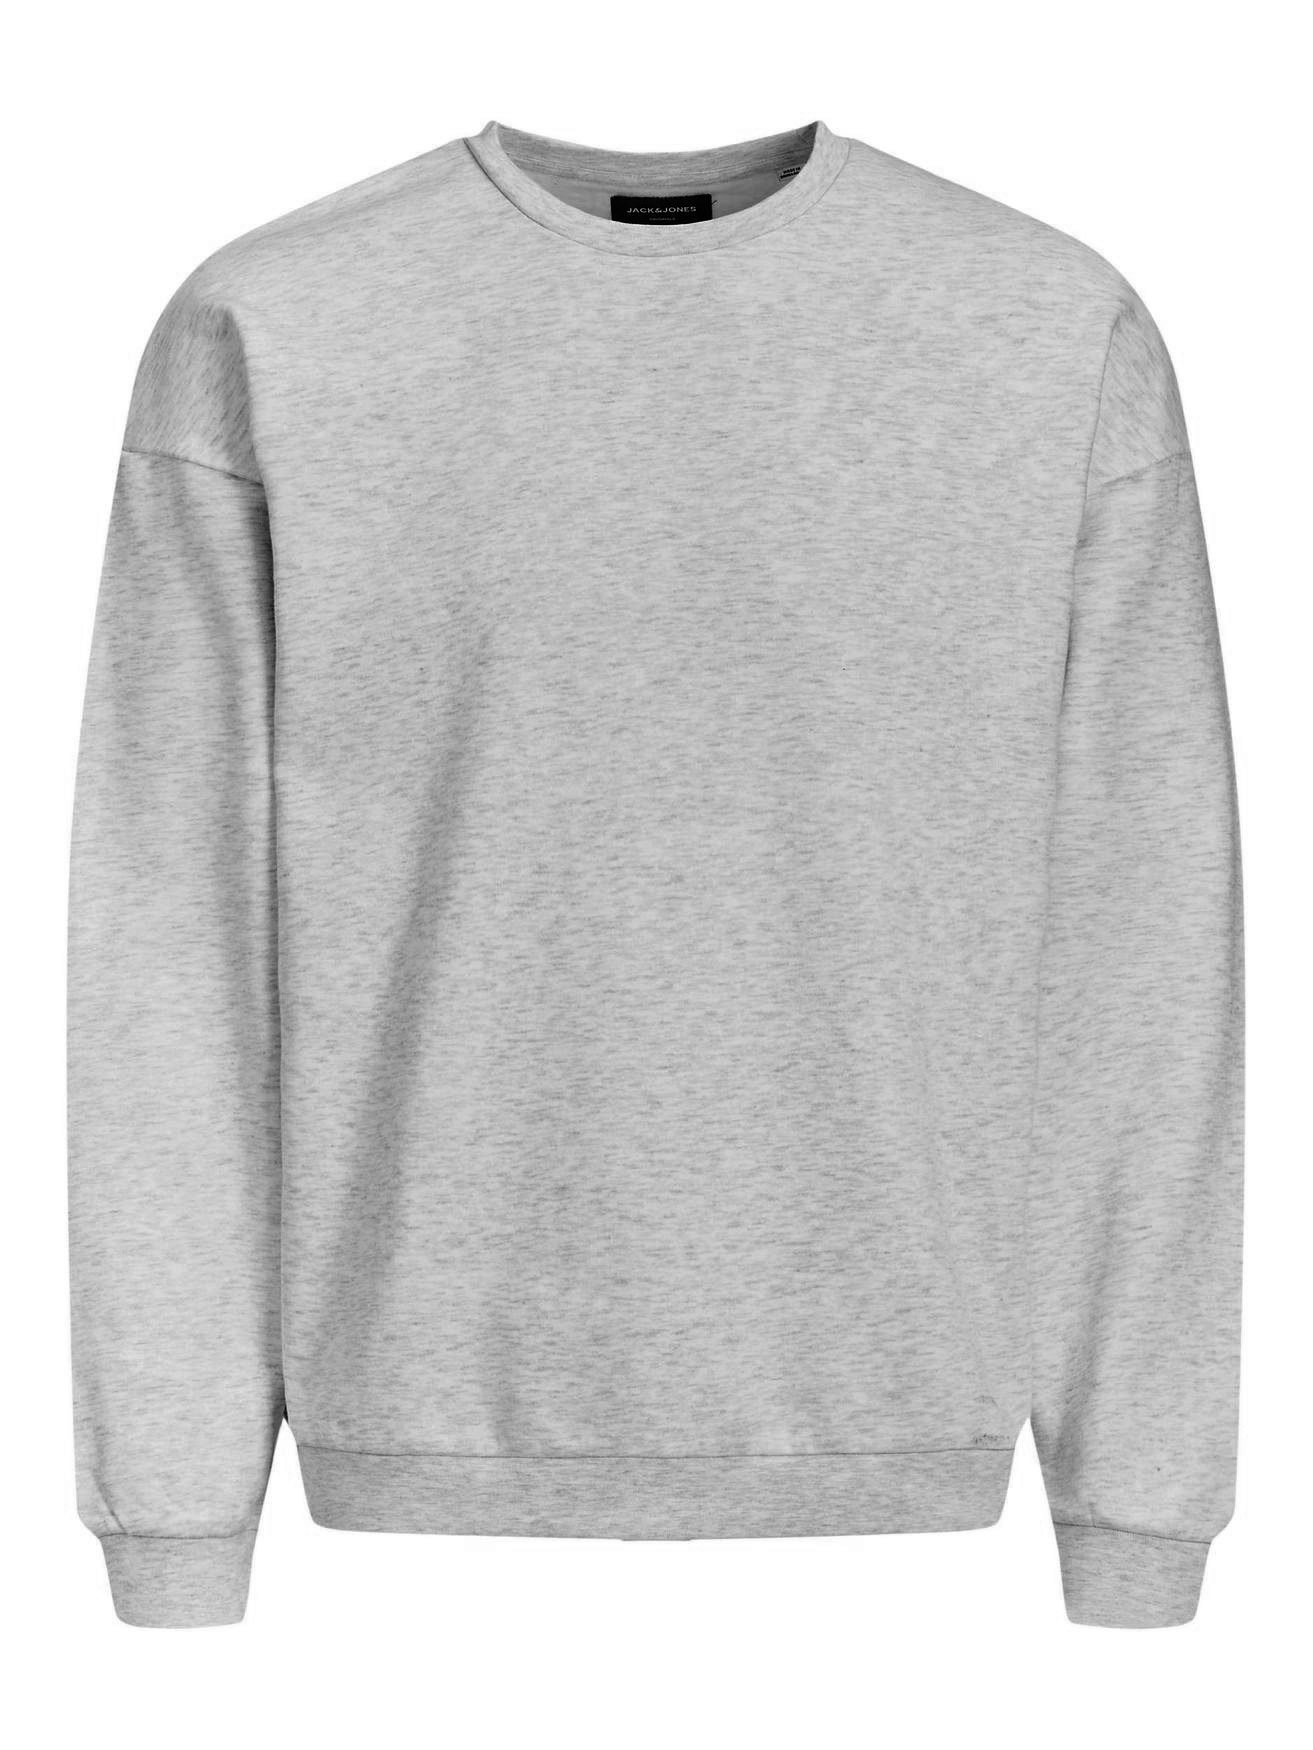 Jack & Jones Sweatshirt Sweater Hellgrau Langarm 4508 Rundhals JORBRINK in Basic Pullover Kapuze ohne Shirt